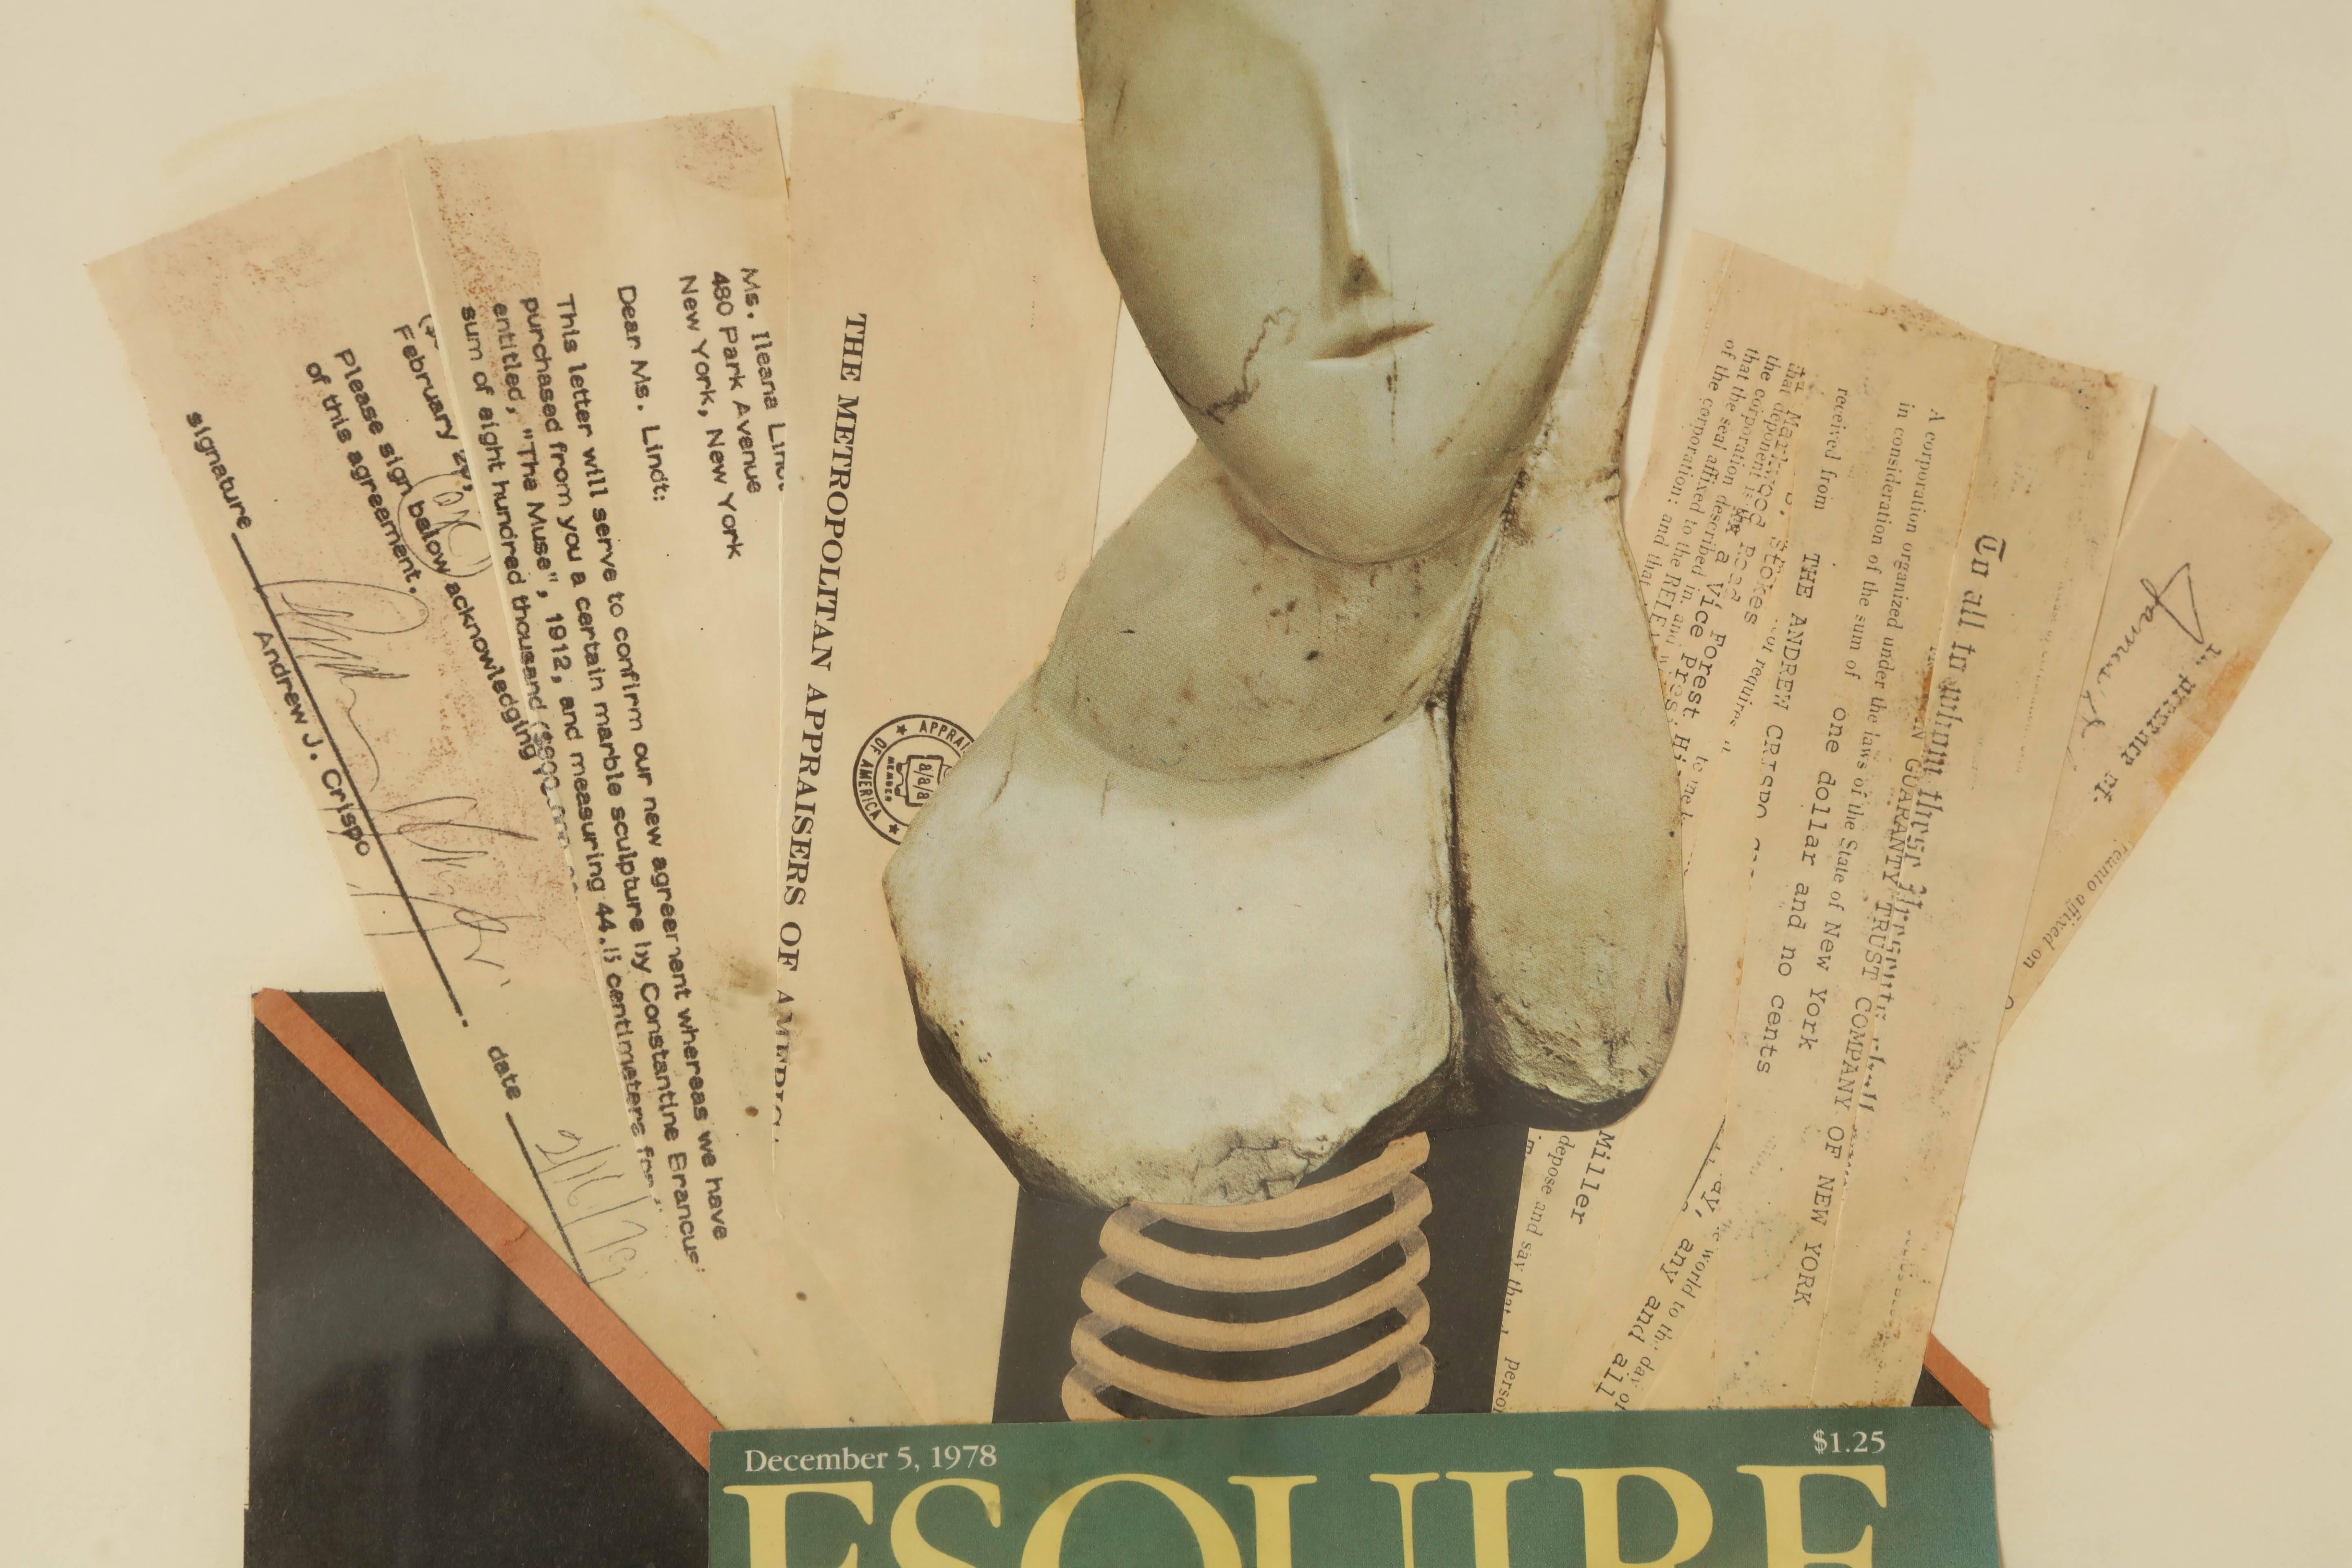 Découpage Collage Brancusi Lawsuit by Ellery Kurtz Presented to Roy Cohn by Andrew Crispo